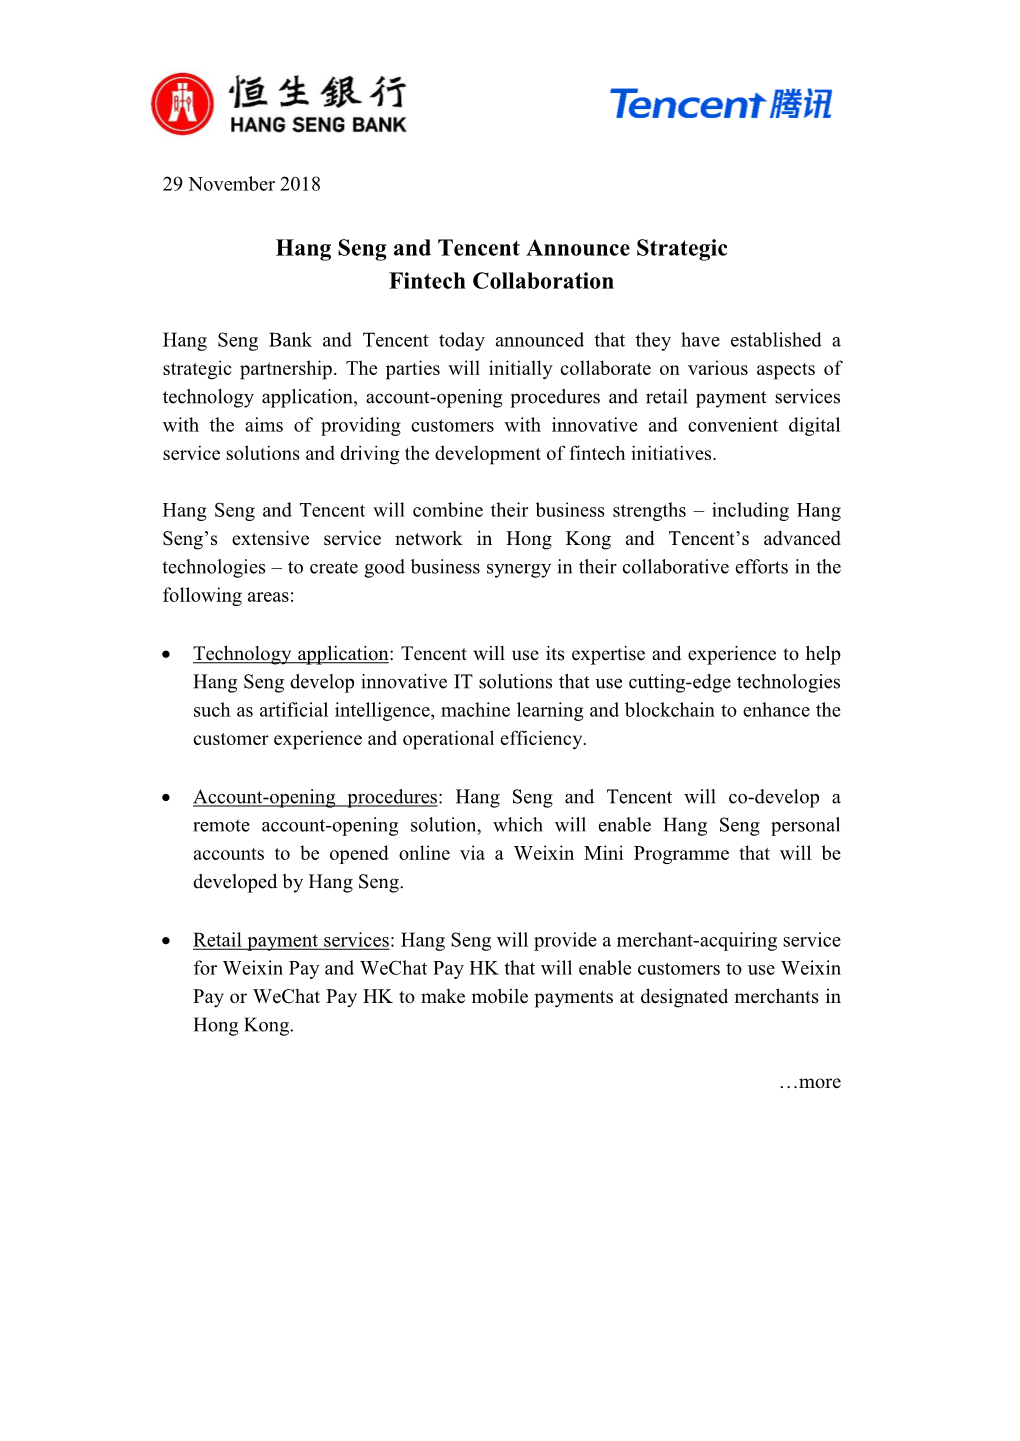 Hang Seng and Tencent Announce Strategic Fintech Collaboration